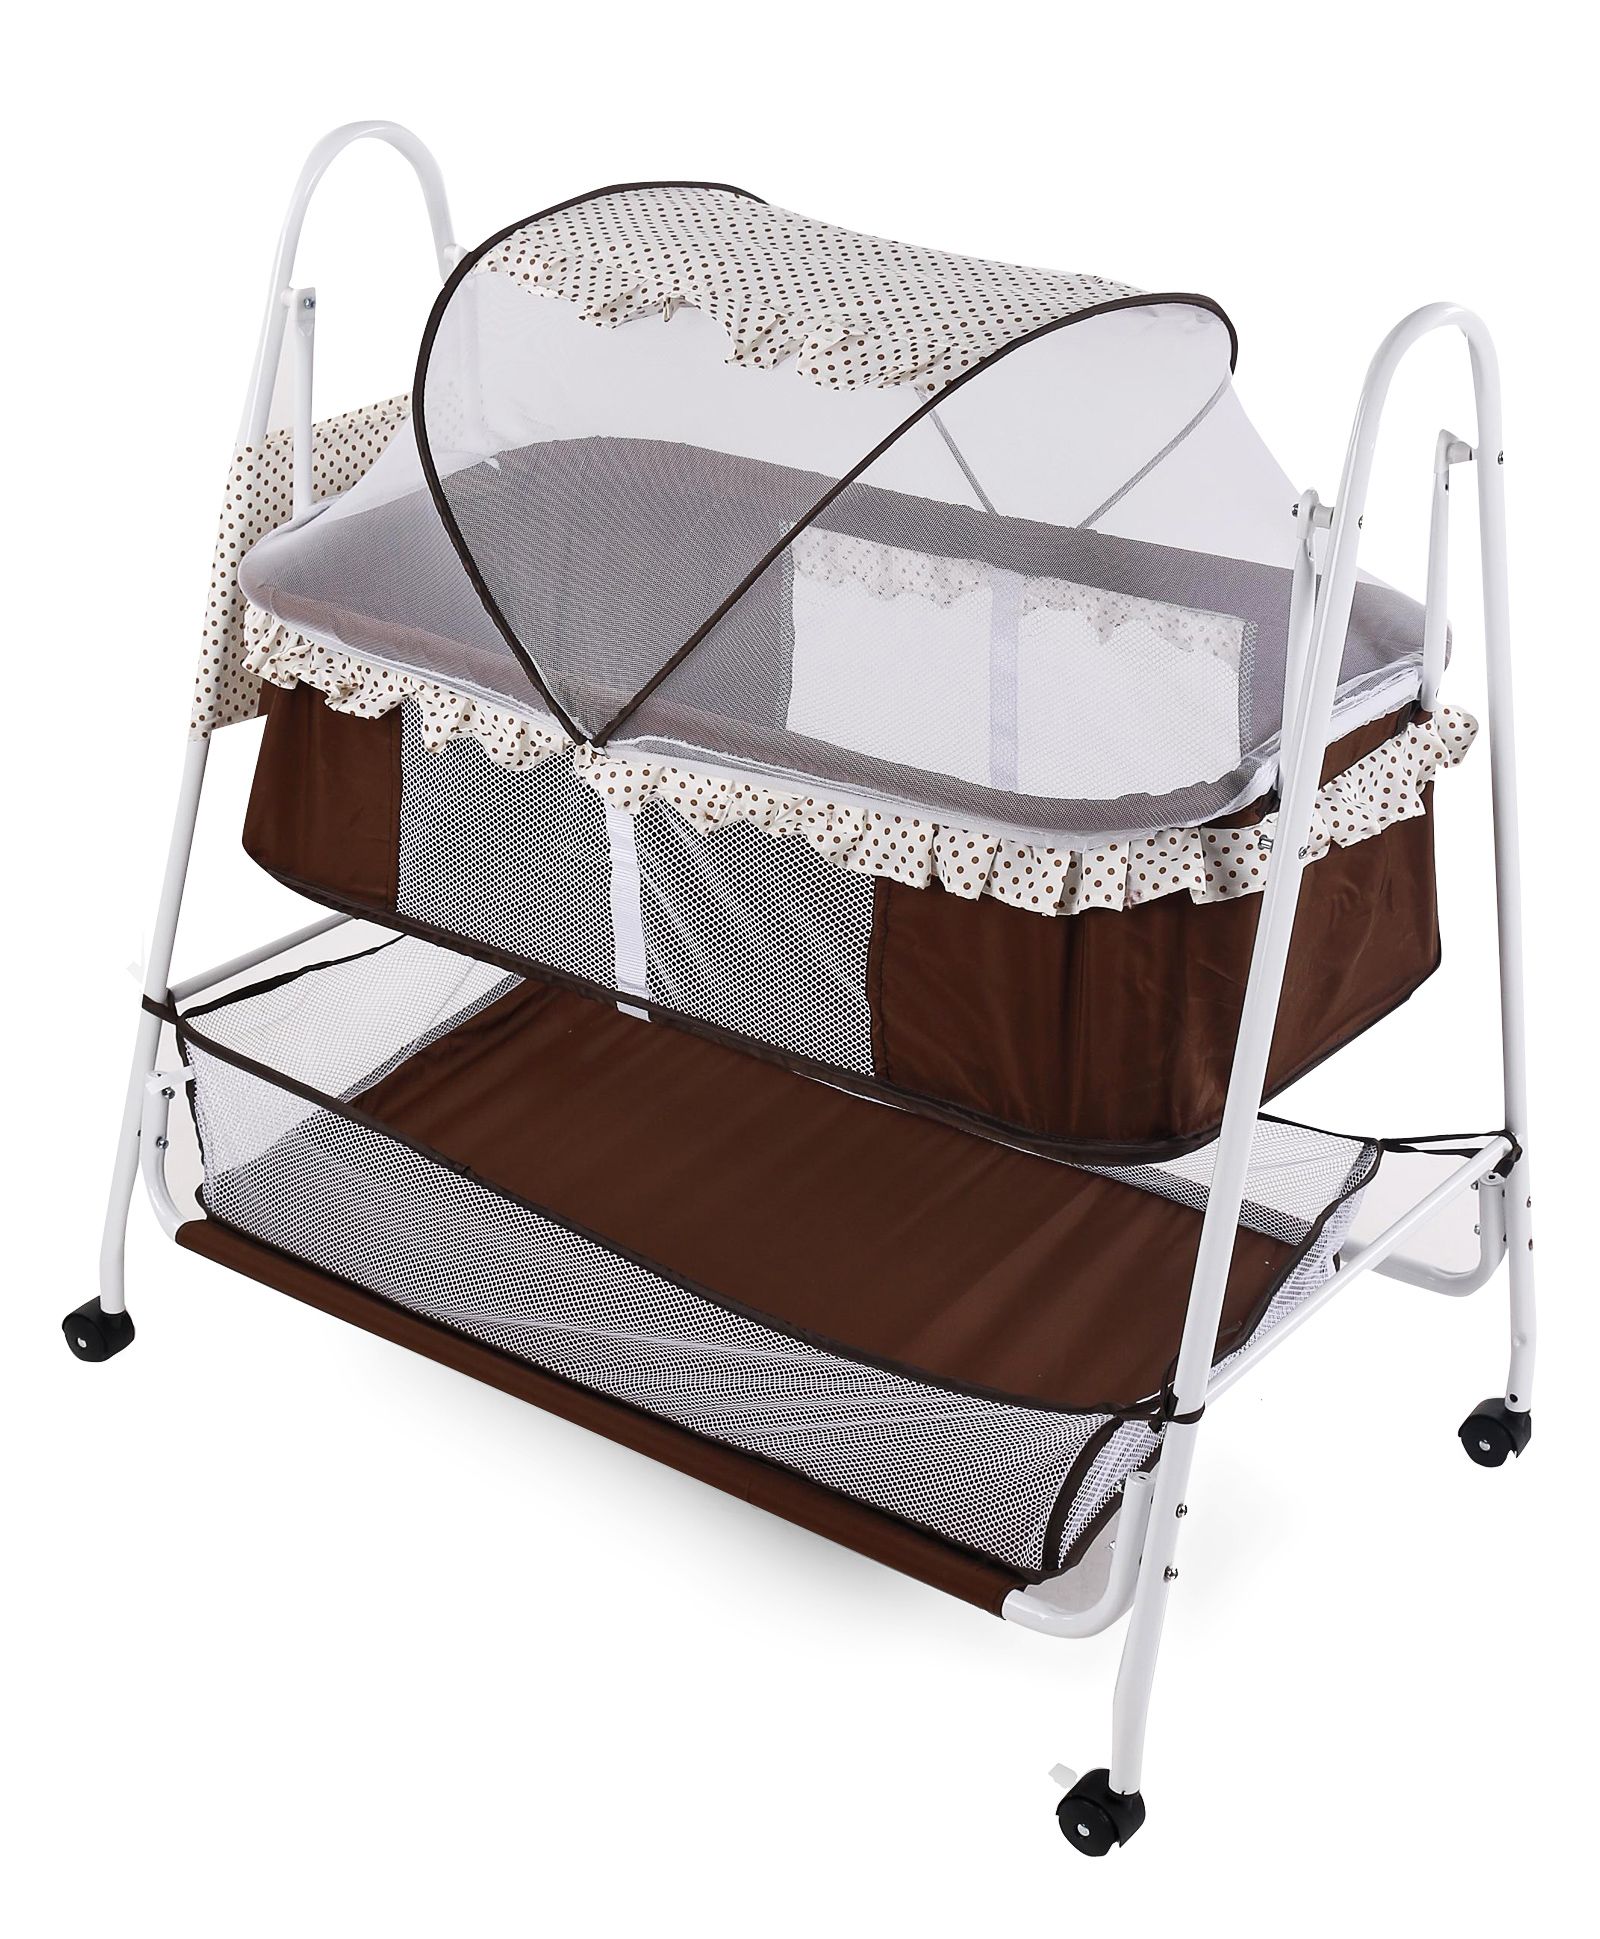 Baby Cradle With Mosquito Net Online in 